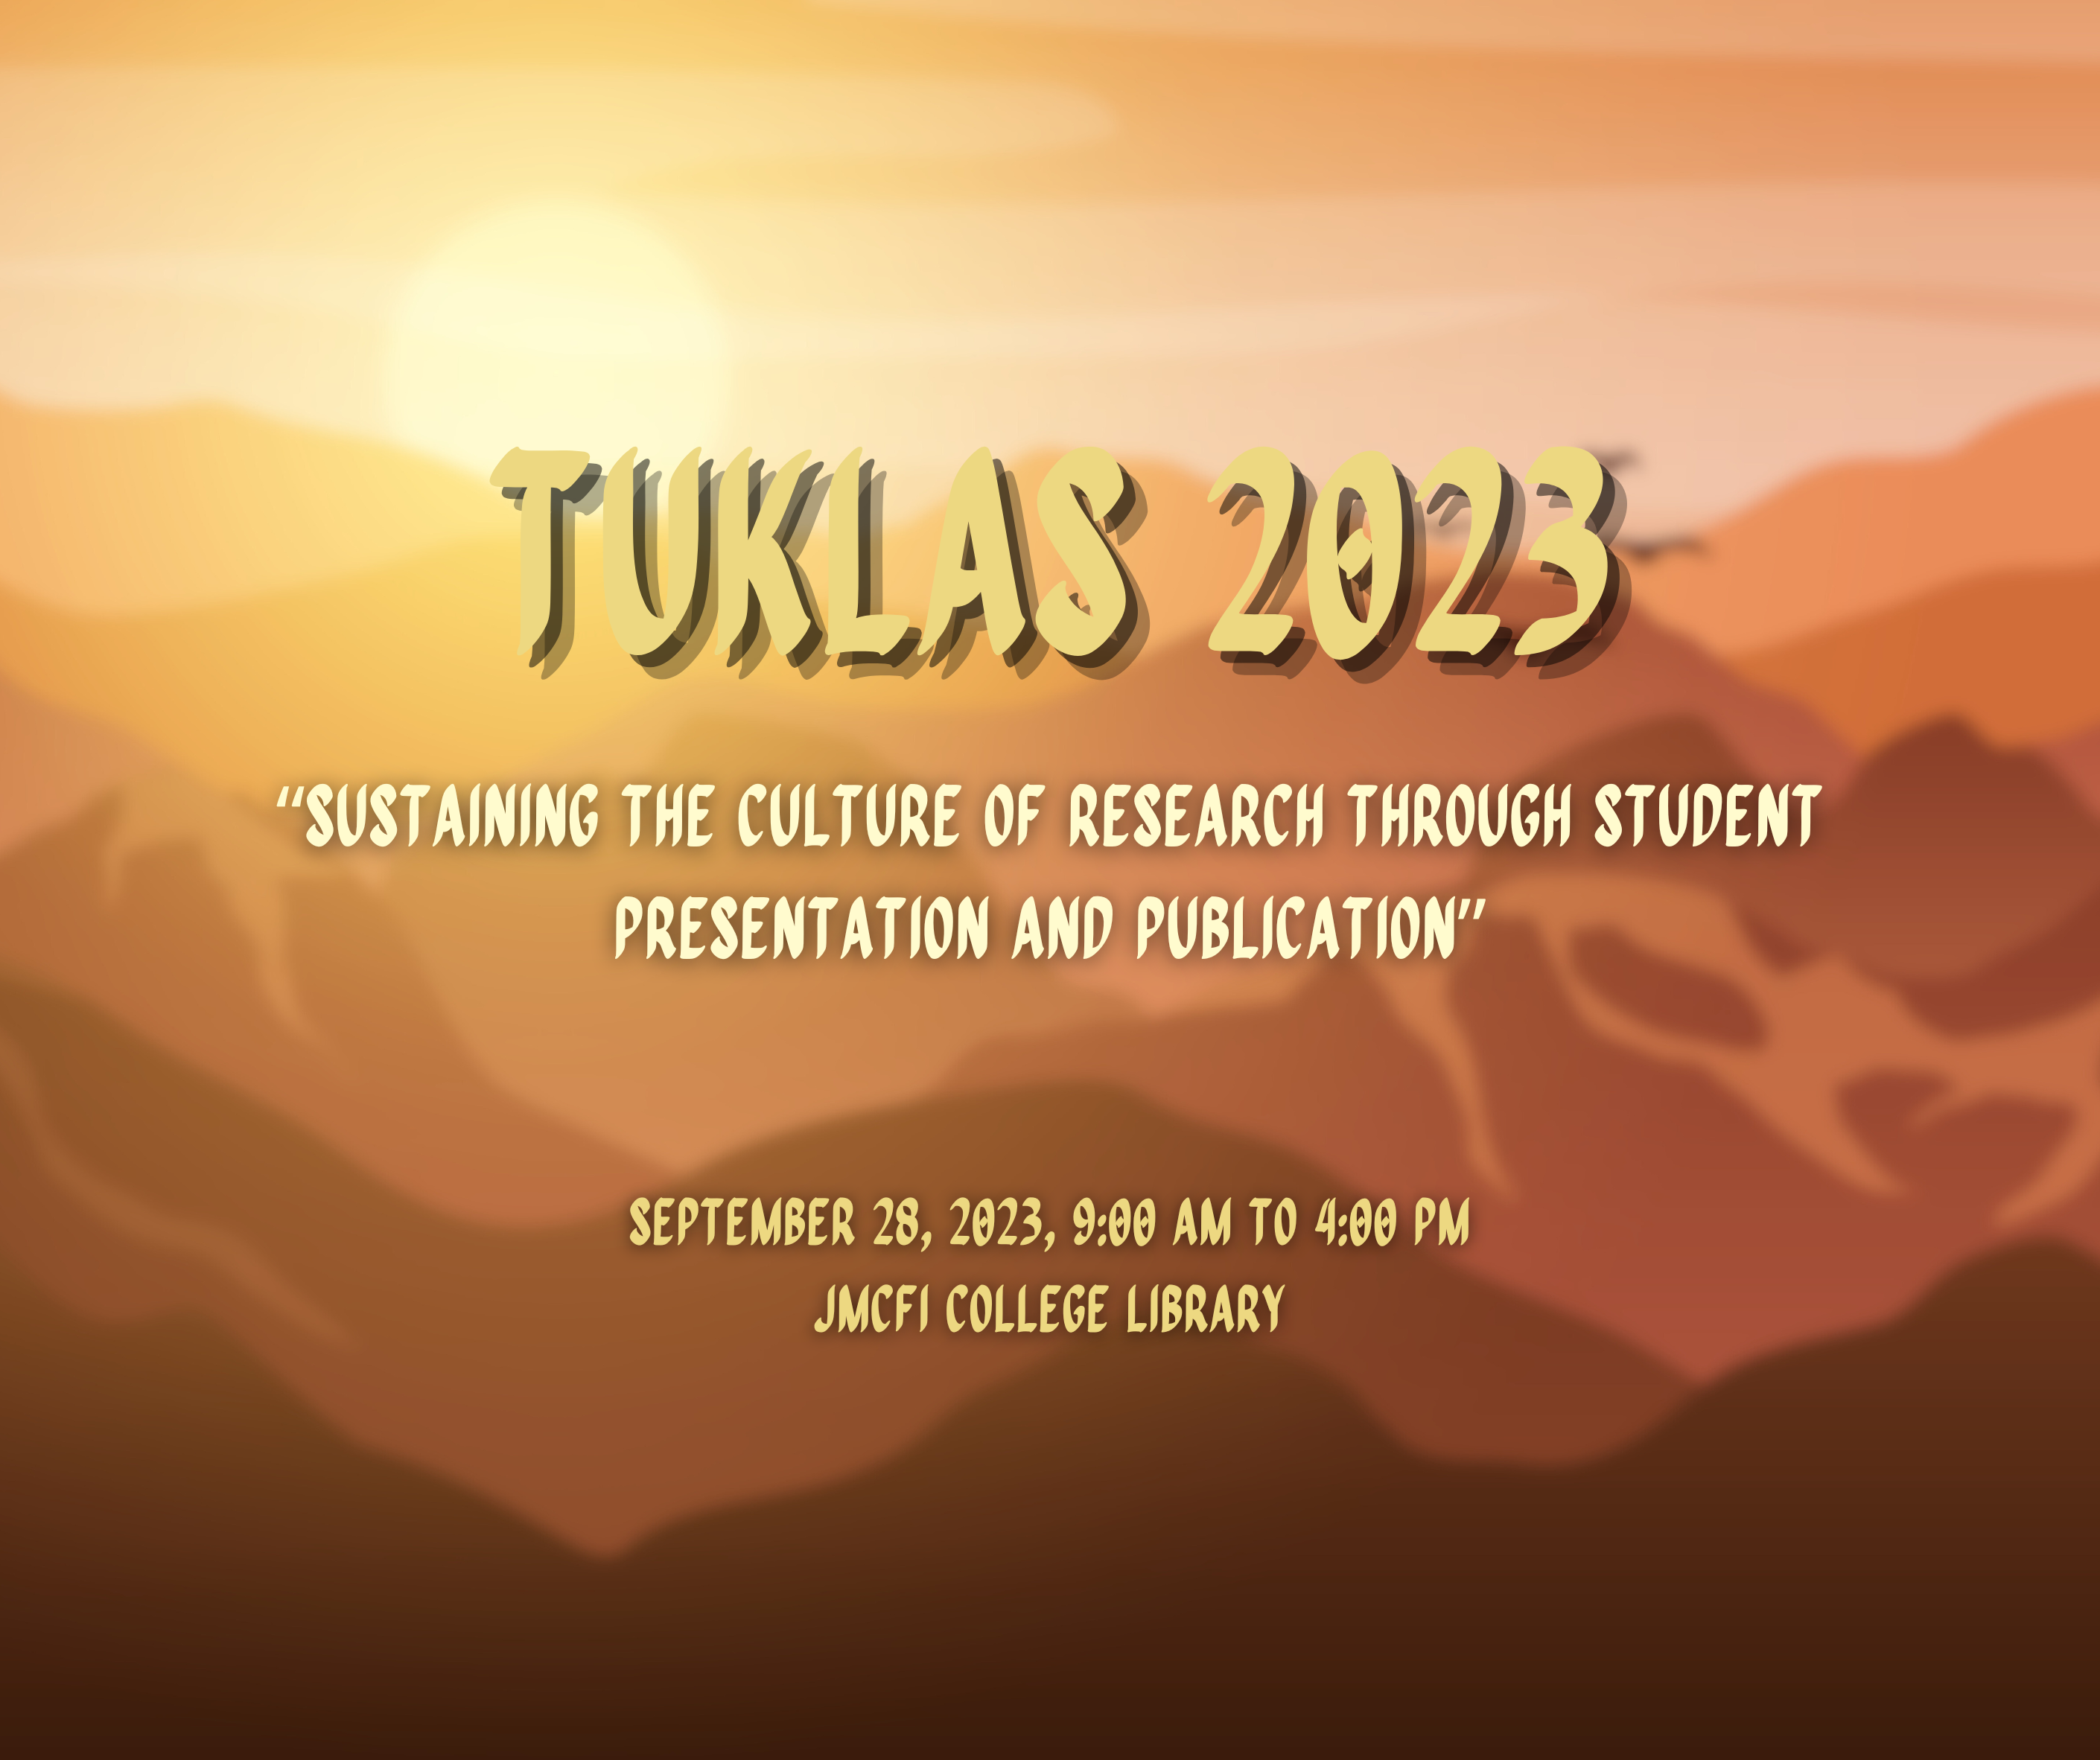 Student researchers to convoke in TUKLAS 2023